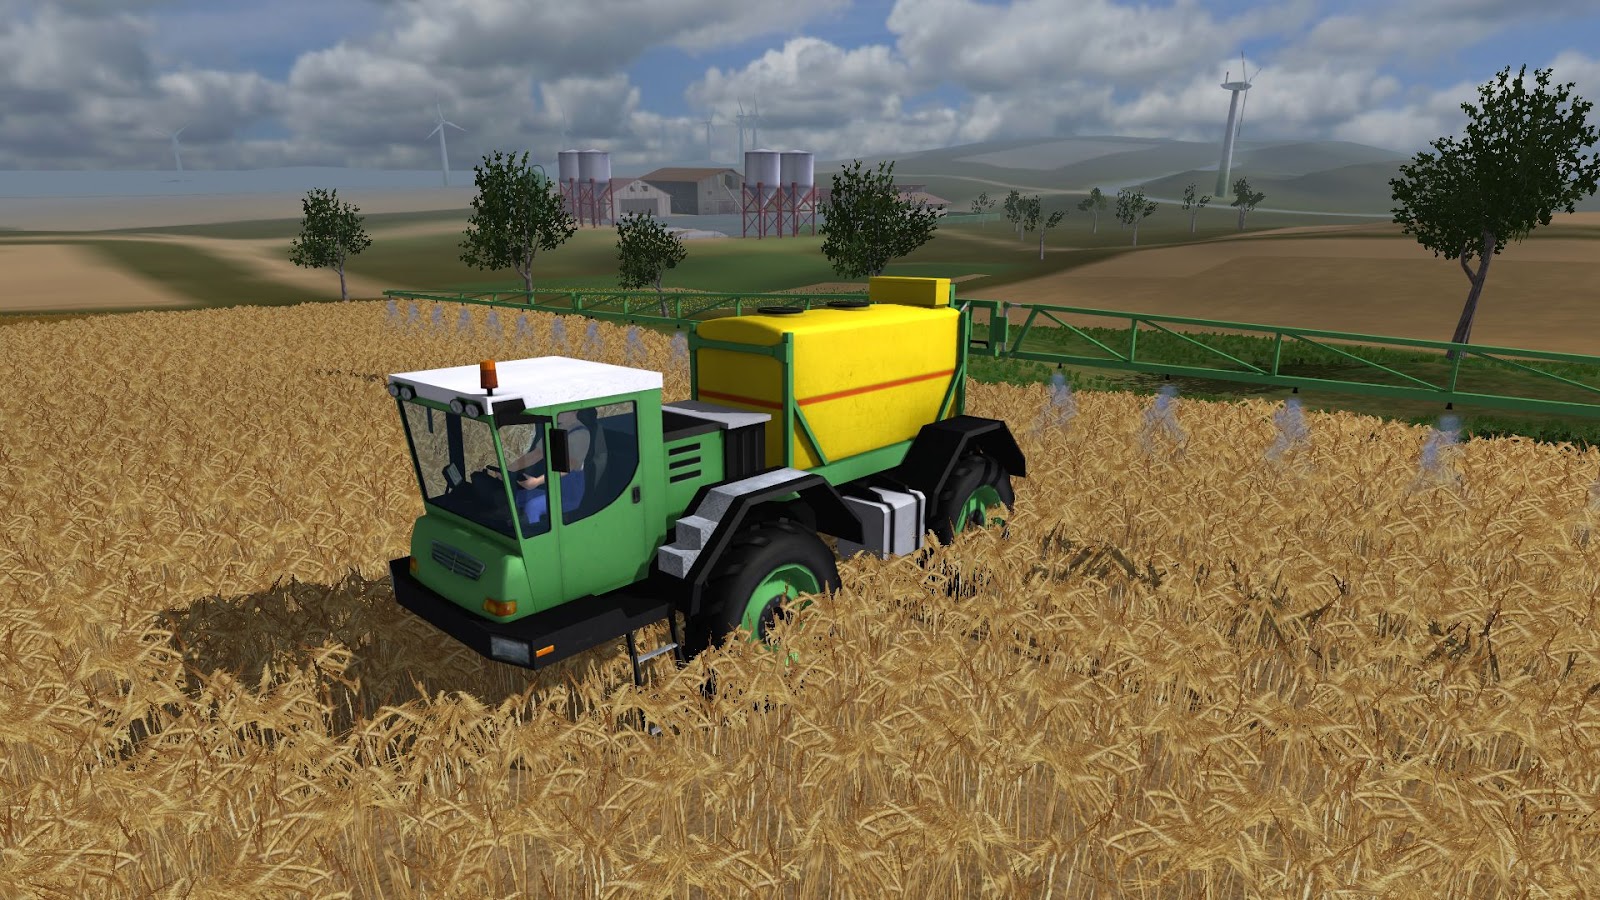 Farming simulator gold. FS 2009. Фермер симулятор 15 Голд эдишн. Фарминг симулятор 2009. Farming Simulator 2009 Gold Edition.